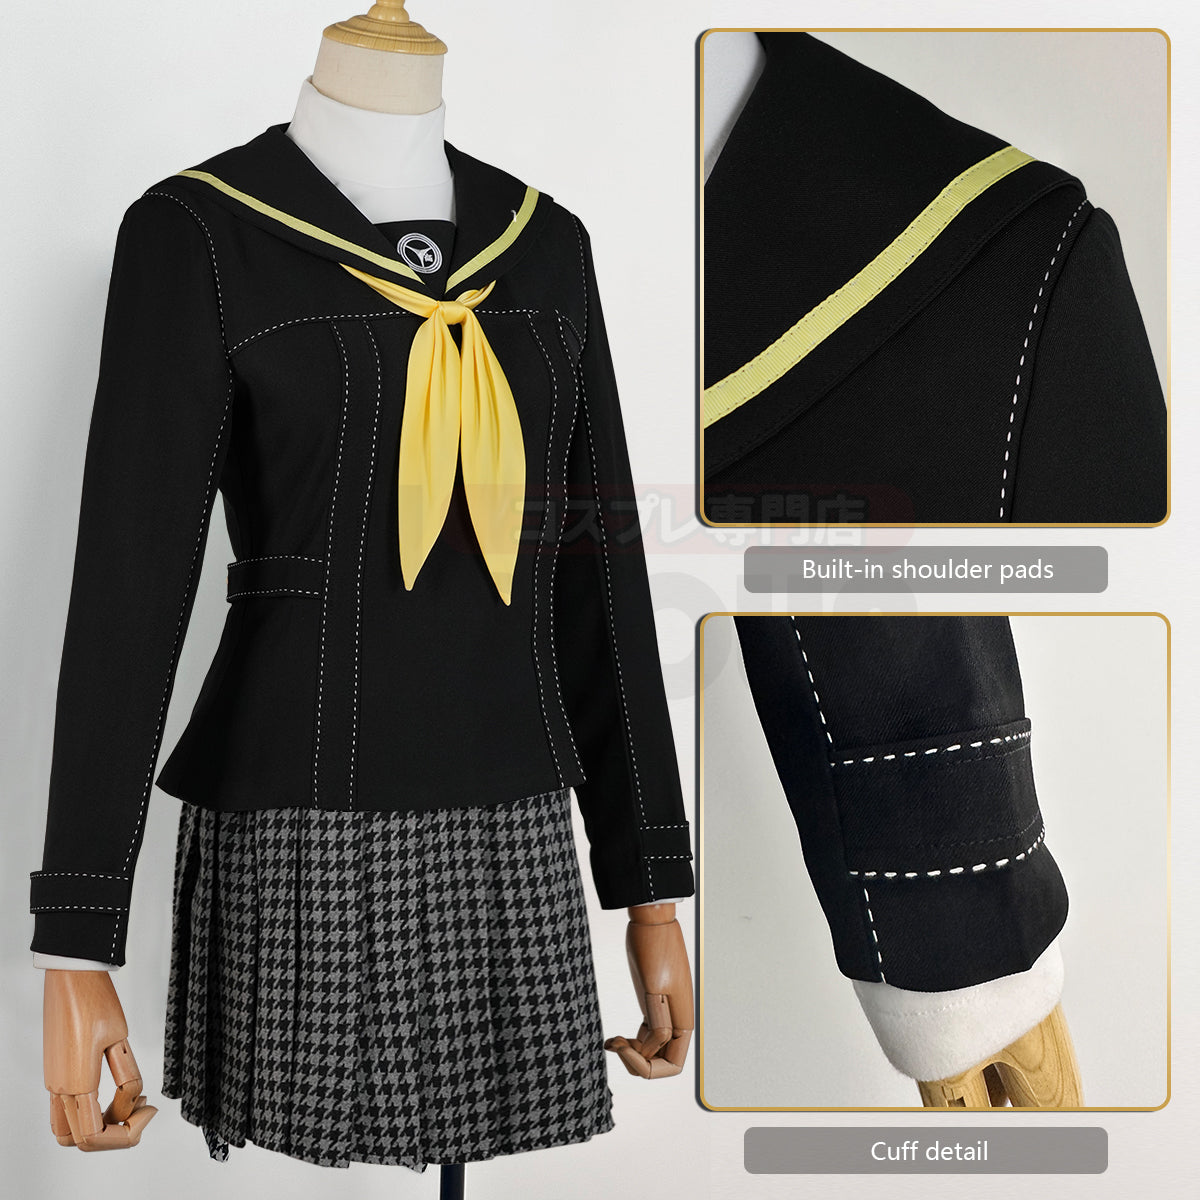 HOLOUN P4 Game Kujikawa Rise Cosplay Costume Embroidery School Badge Suit Plaid Pattern Skirt White Shirt Yellow Tie Daily Wear